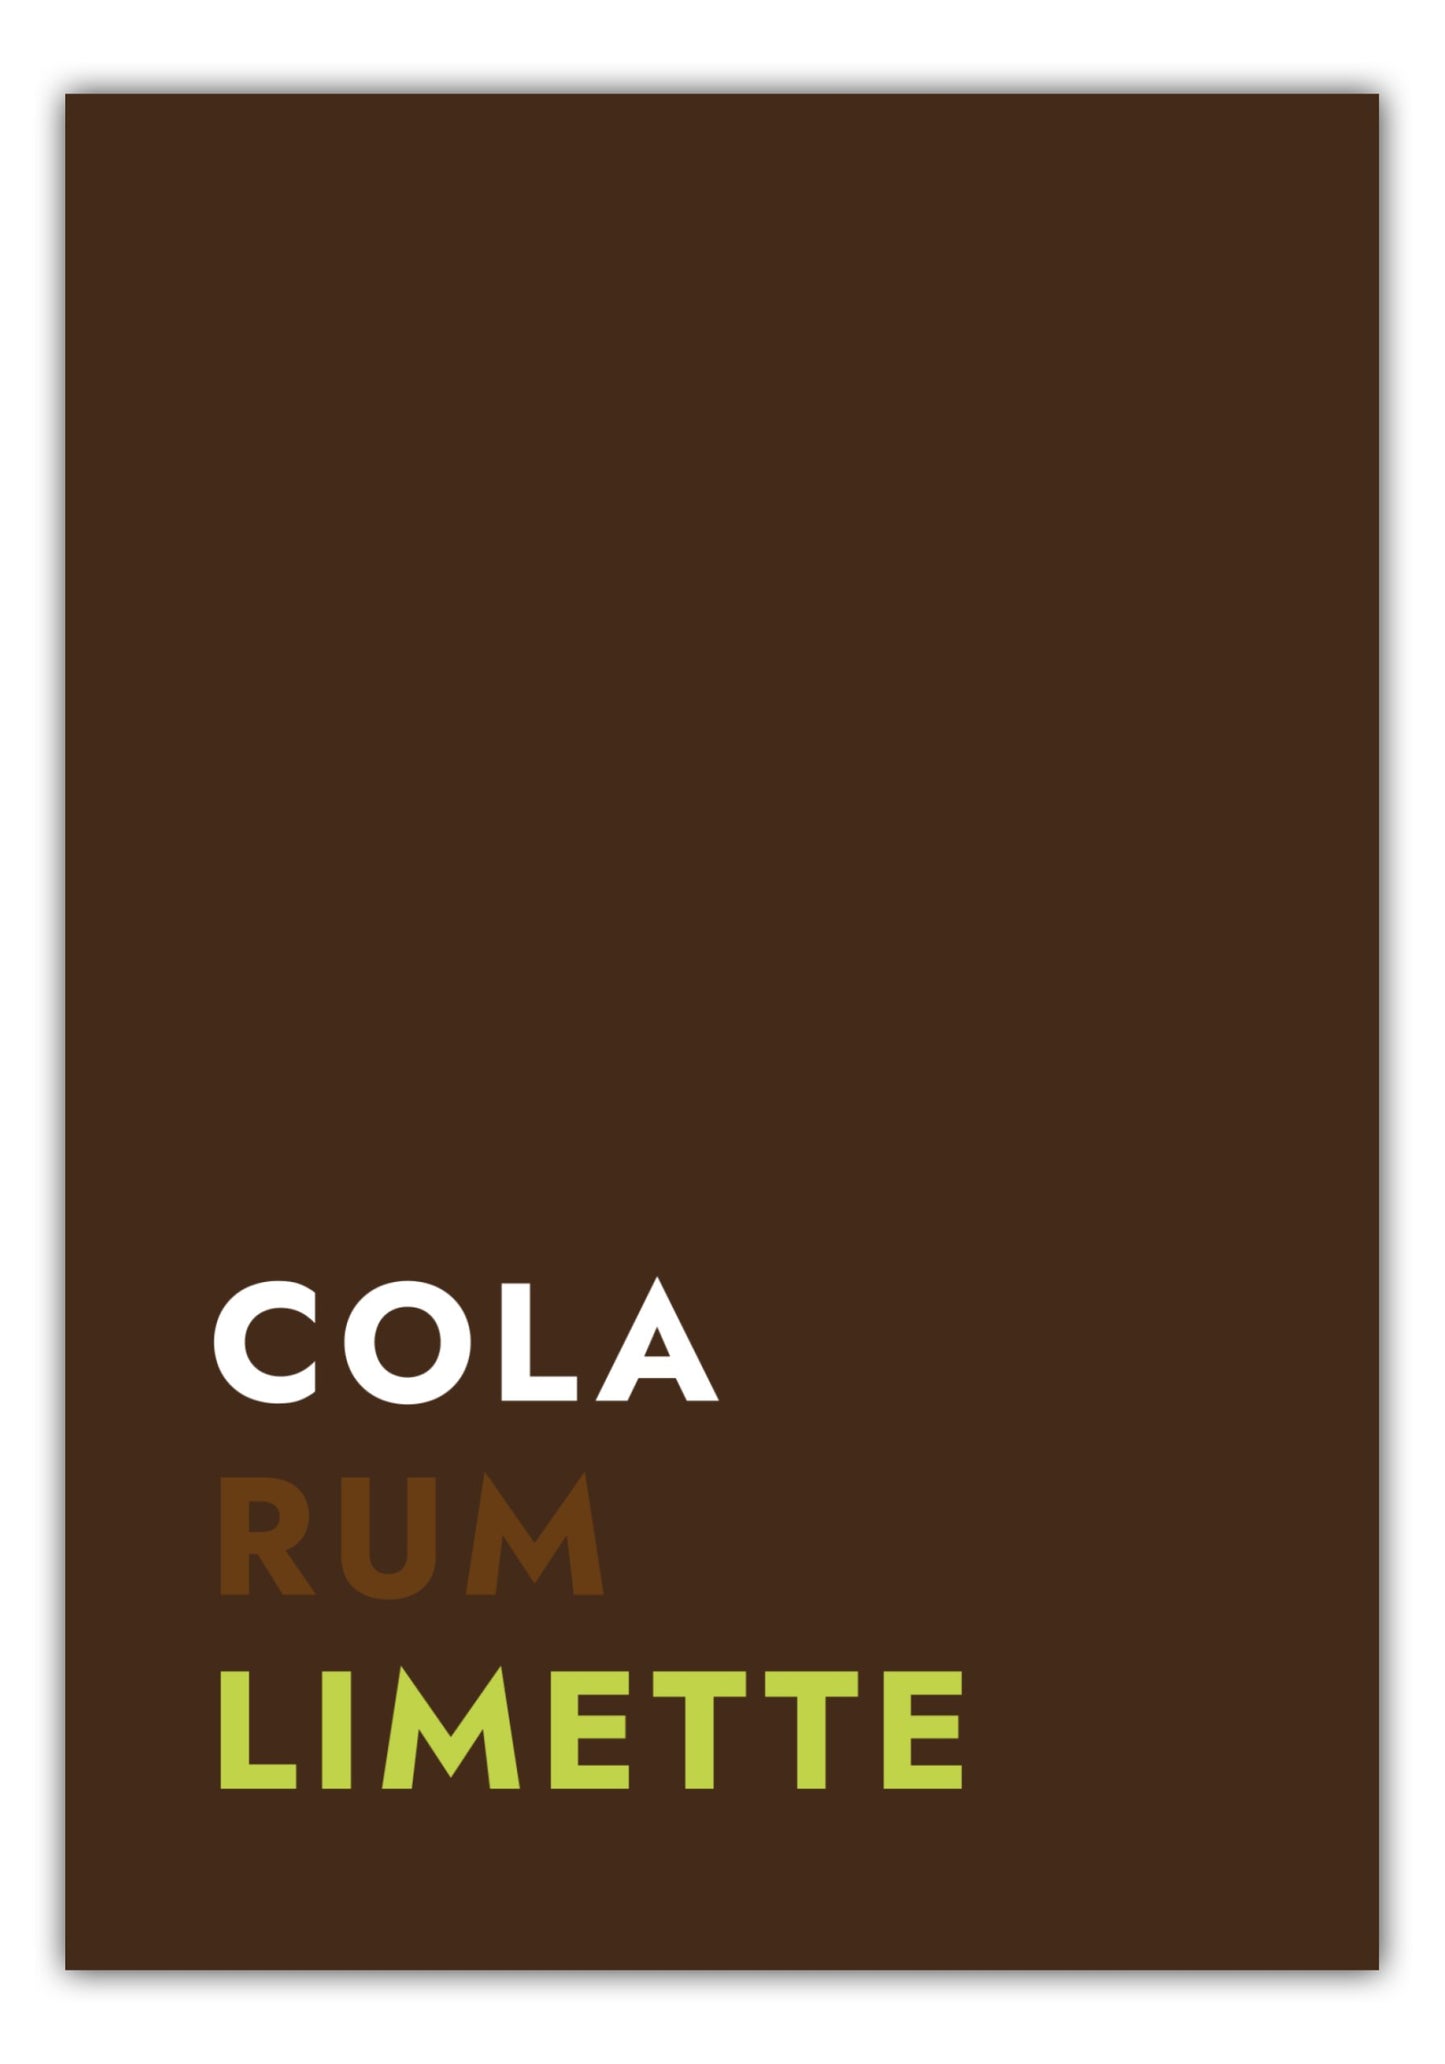 Poster Cocktail Cuba Libre - Text